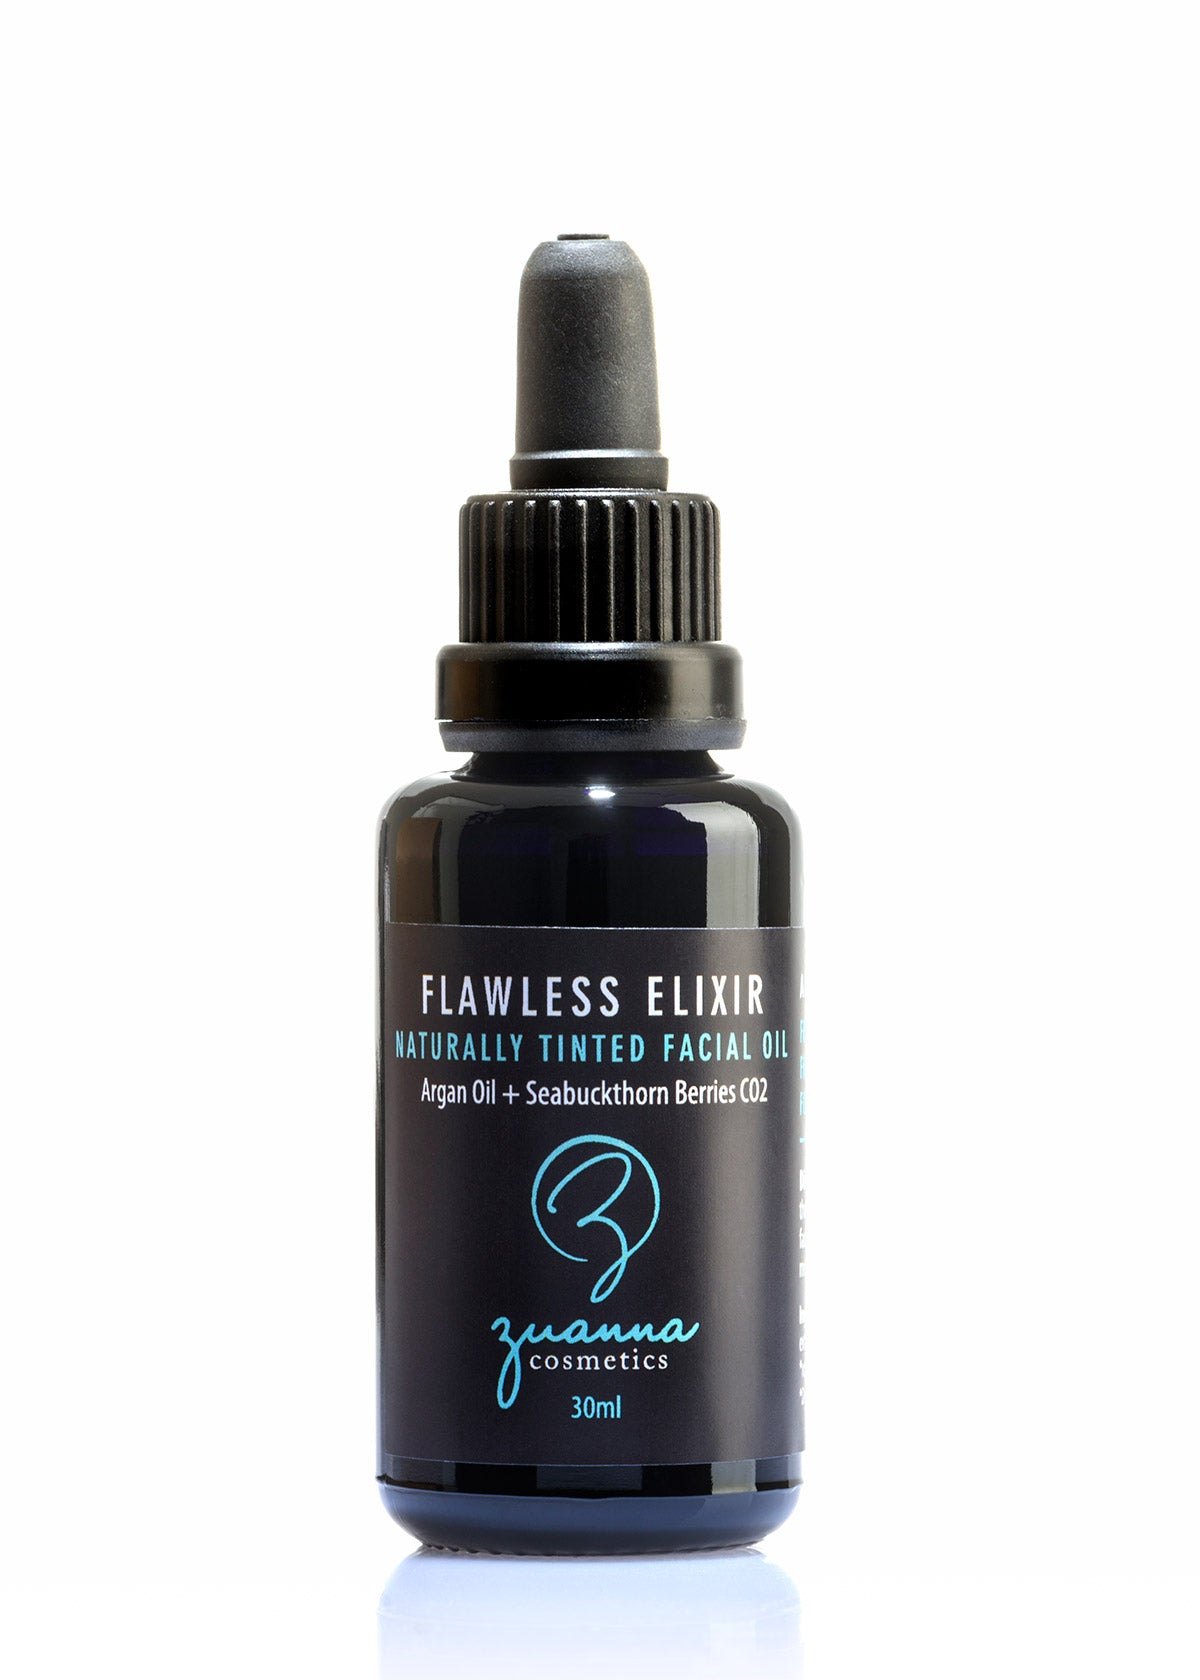 Flawless Elixir - Naturally Tinted Facial Oil - Zuanna 